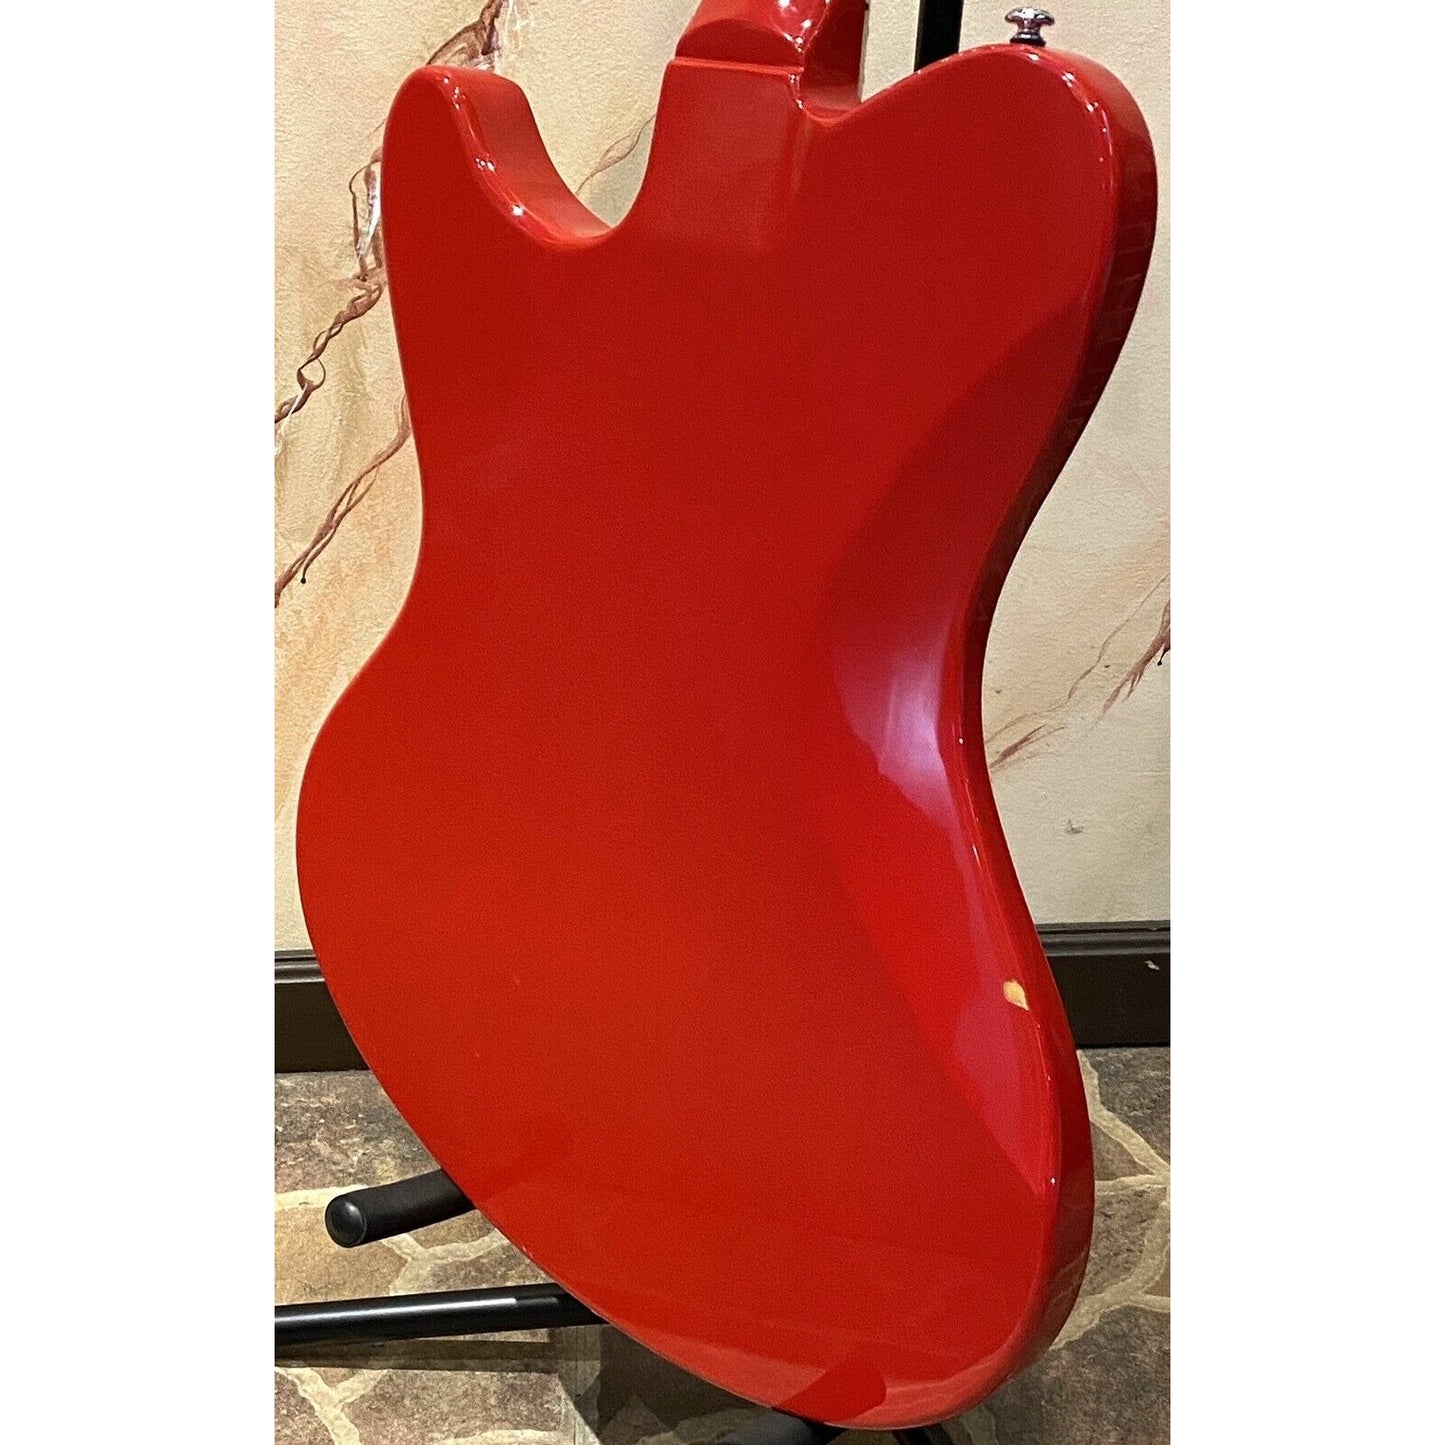 Schecter Guitar Research Diamond Series Ultra III Red Electric Guitar